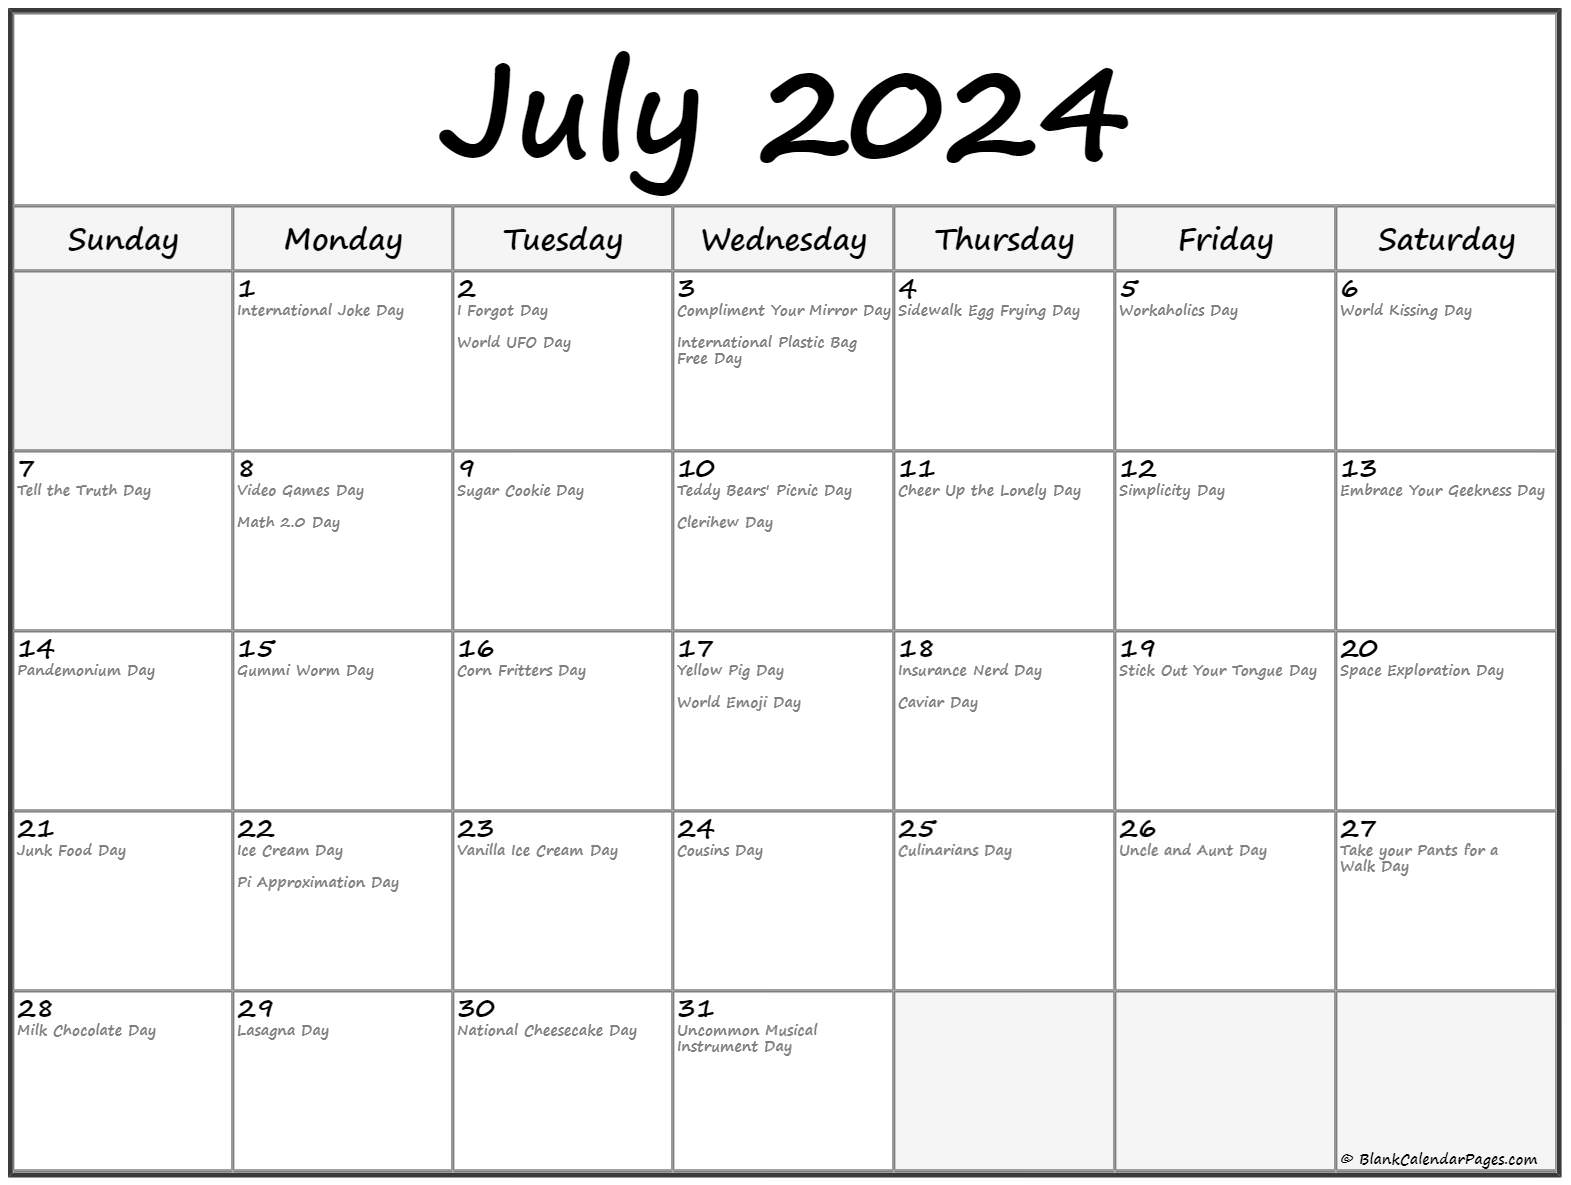 july-2023-calendar-free-printable-calendar-july-2023-calendar-free-printable-calendar